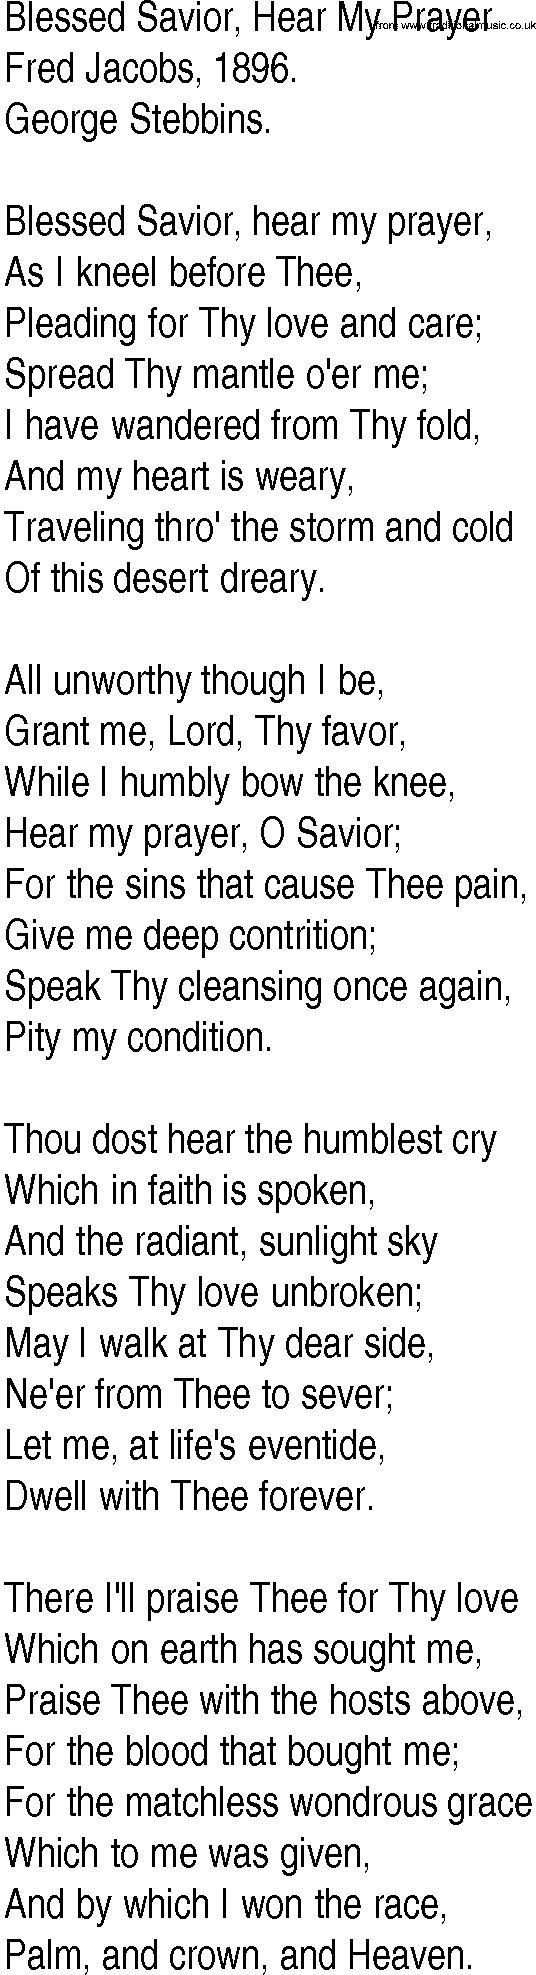 Hymn and Gospel Song: Blessed Savior, Hear My Prayer by Fred Jacobs lyrics